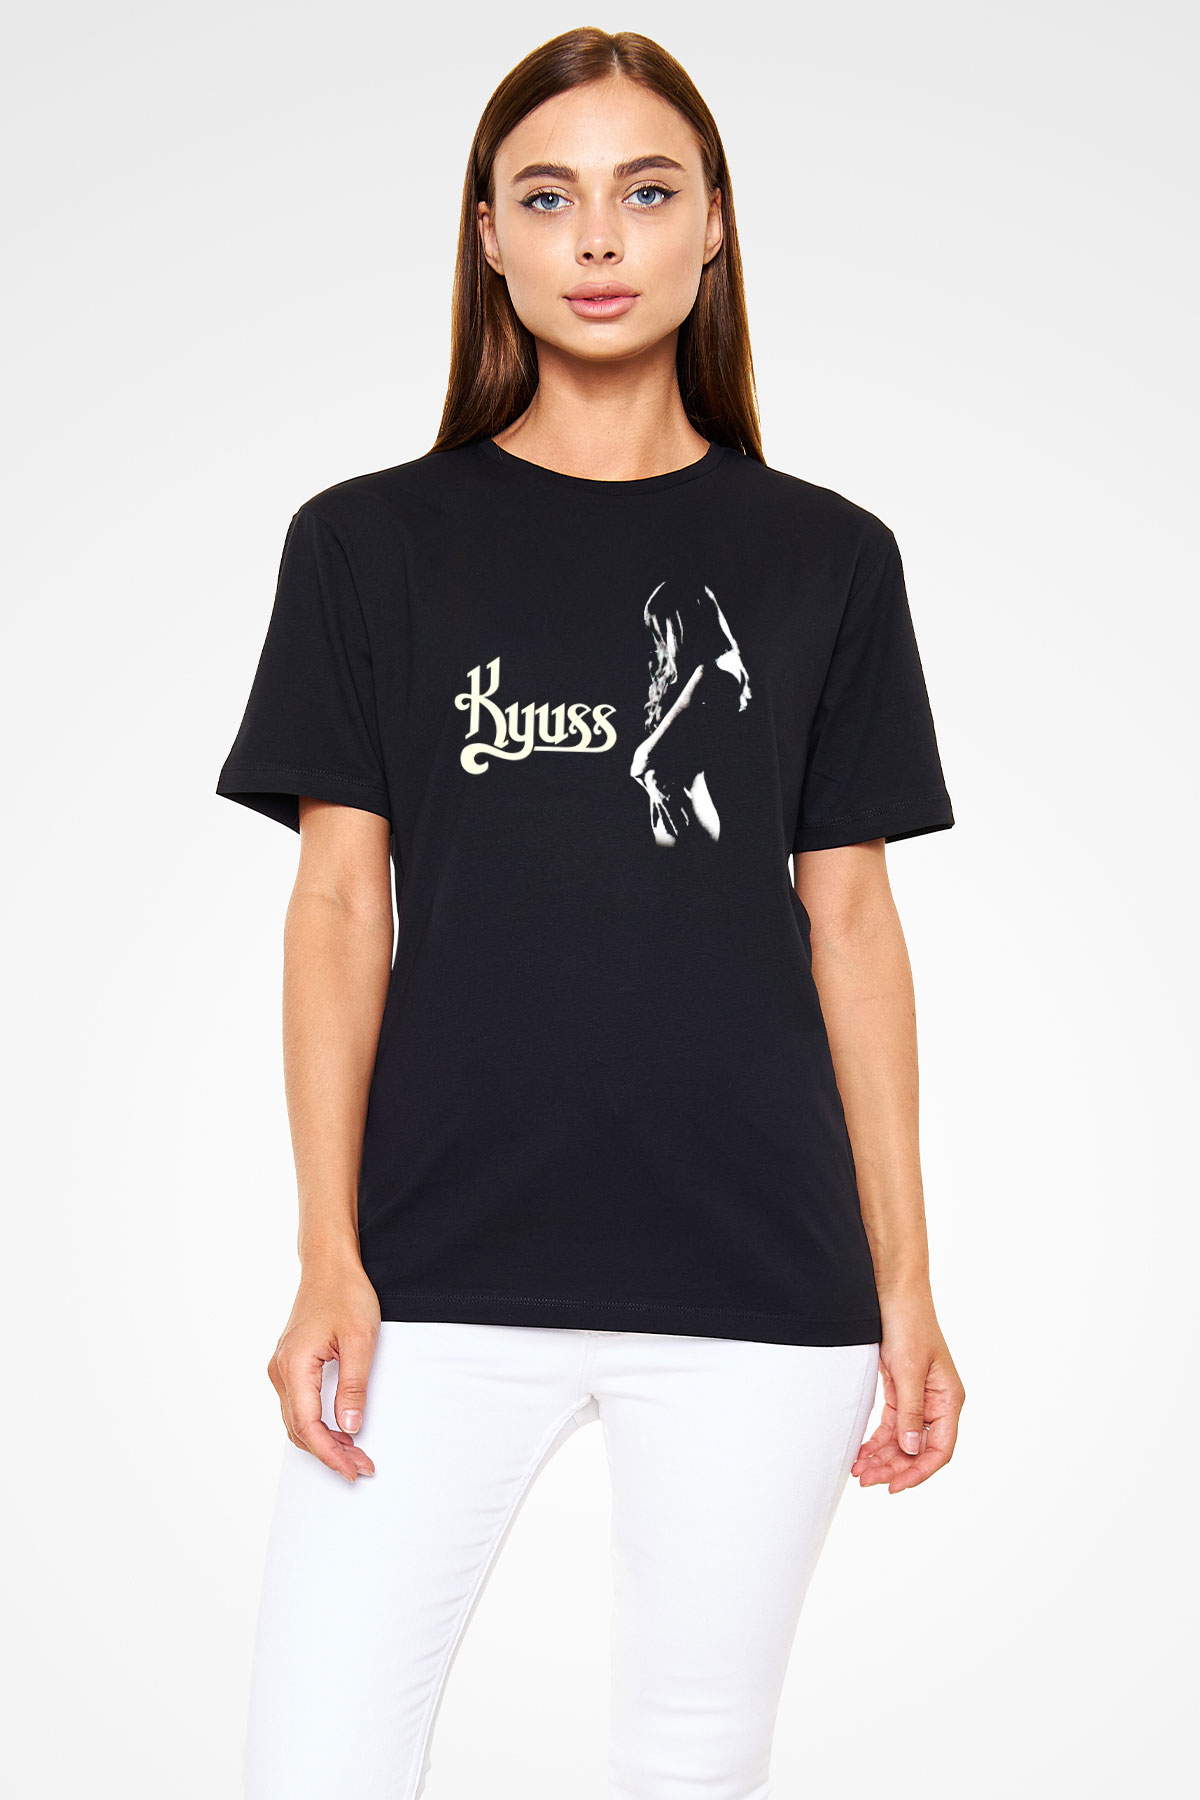 Kyuss Black Unisex T-Shirt - Tees - Shirts